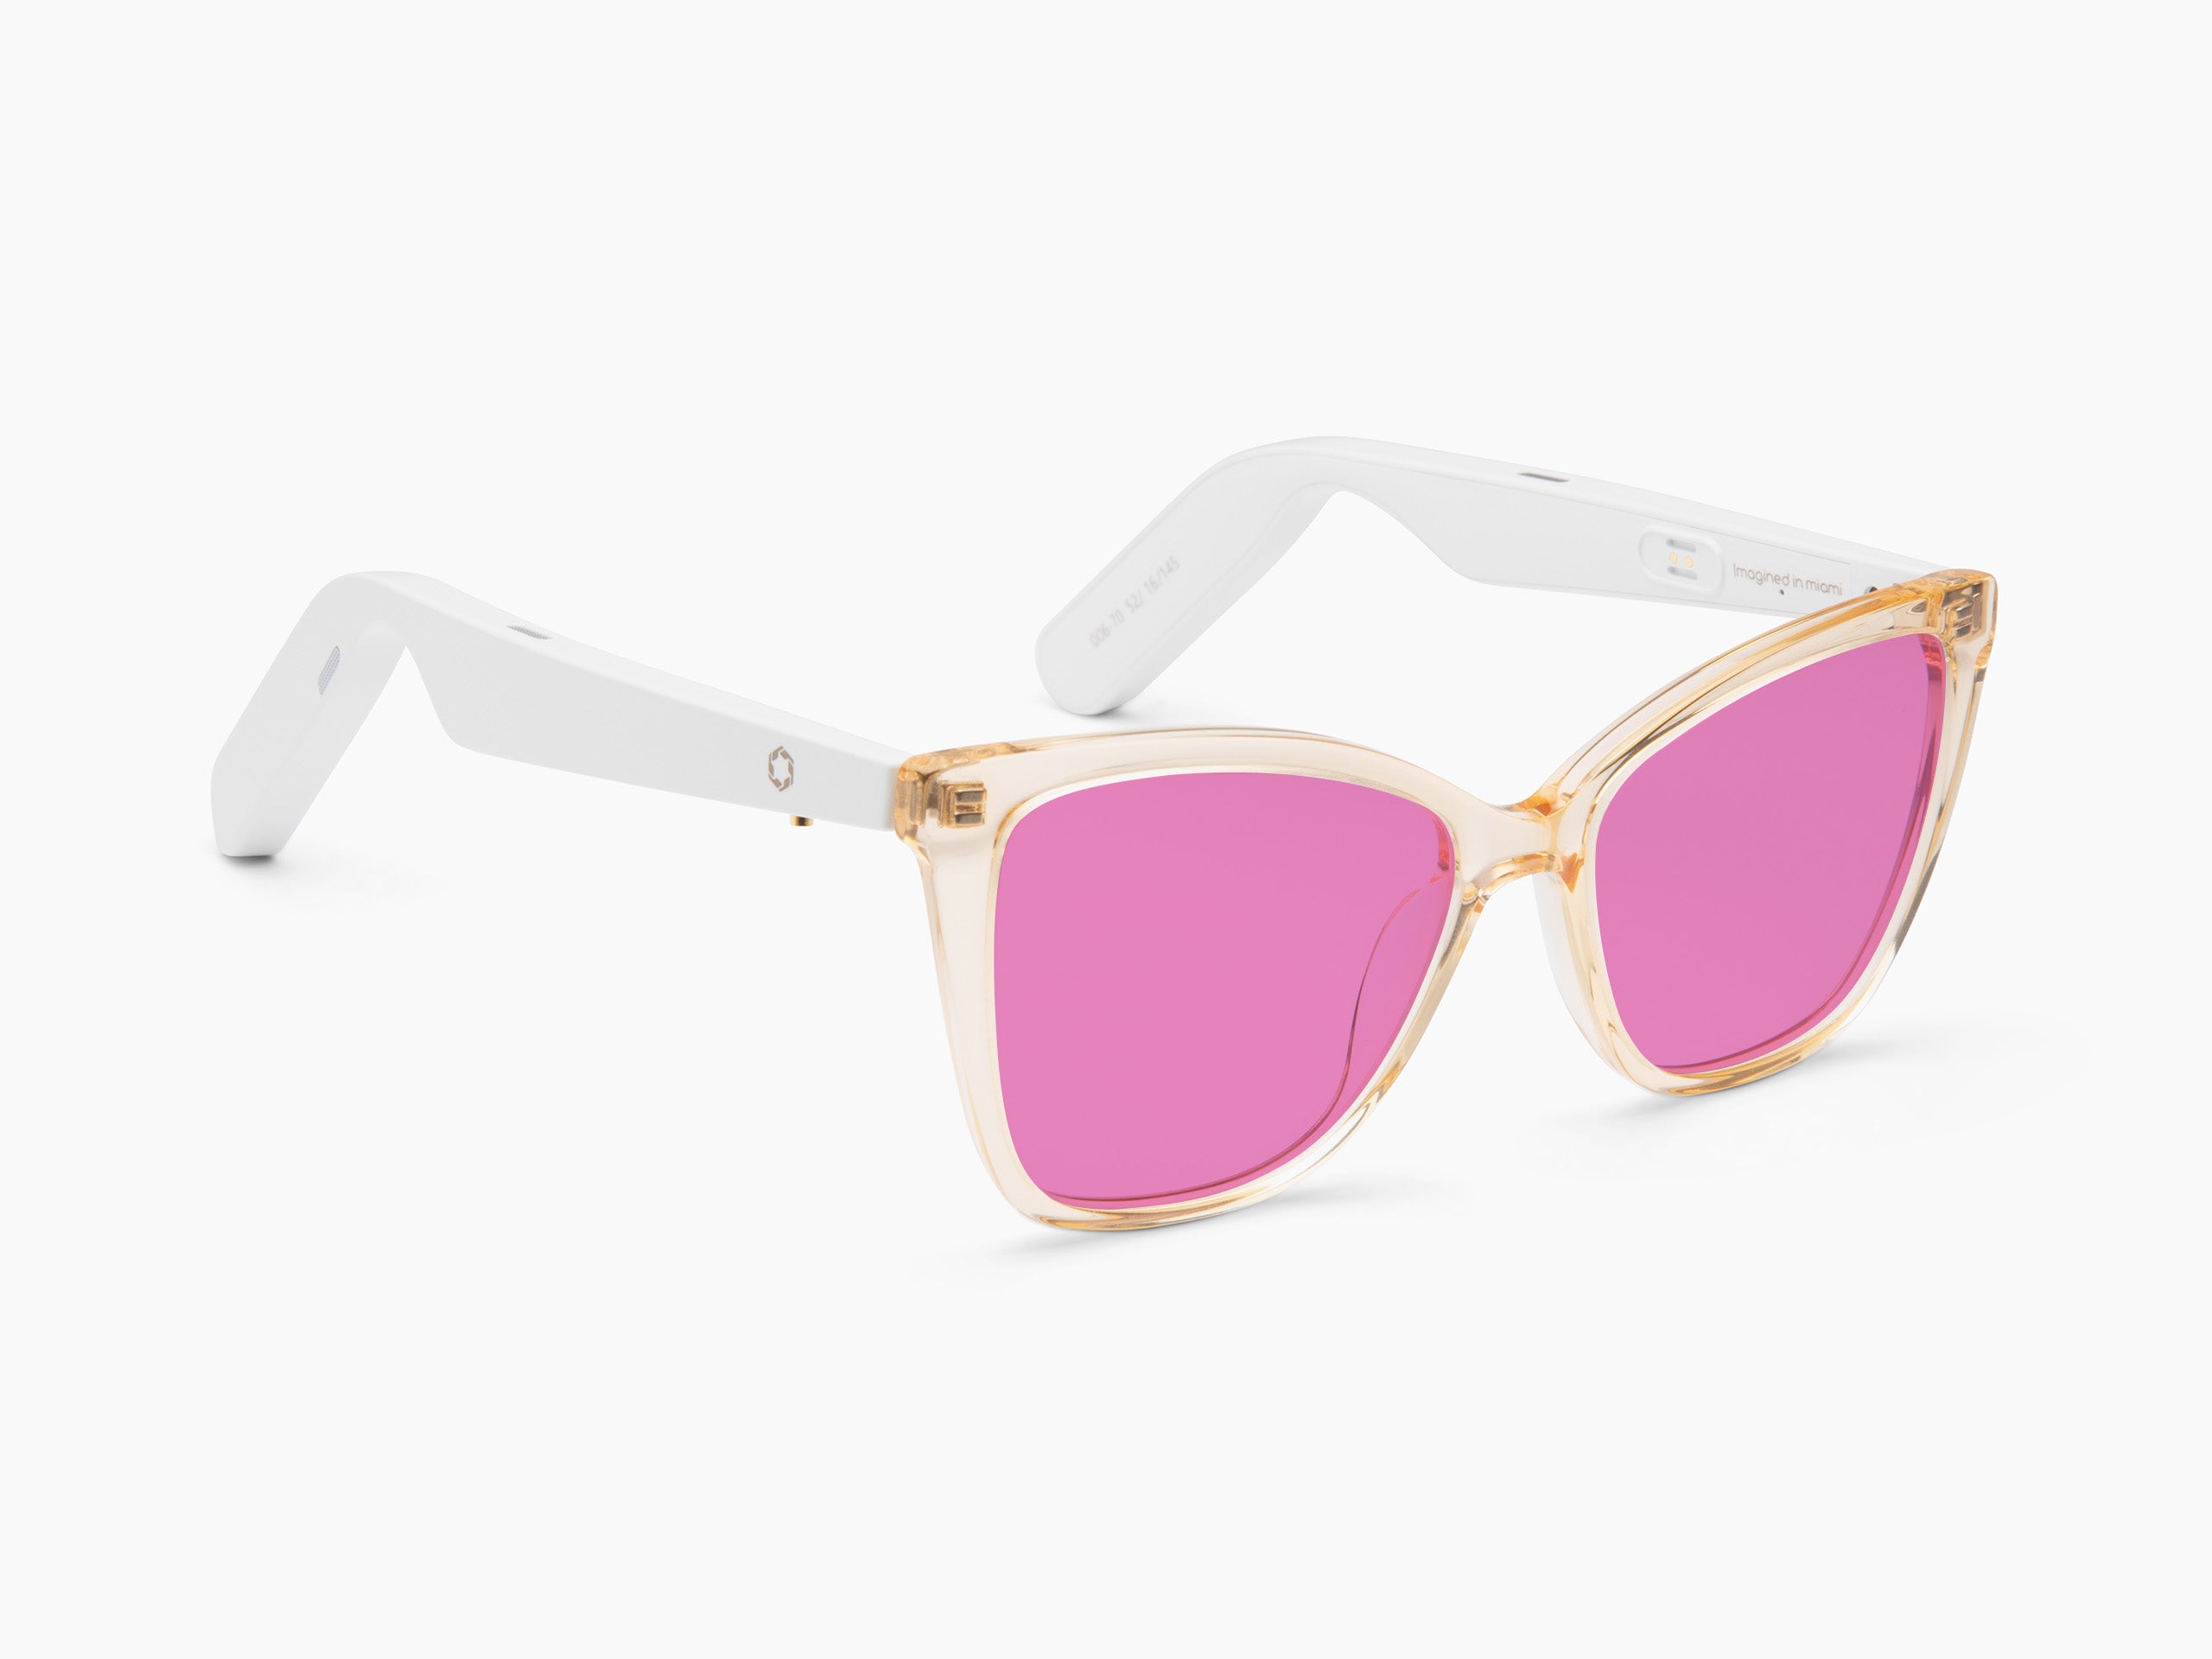 Louis Vuitton Men's Sunglasses for sale in Orlando, Florida